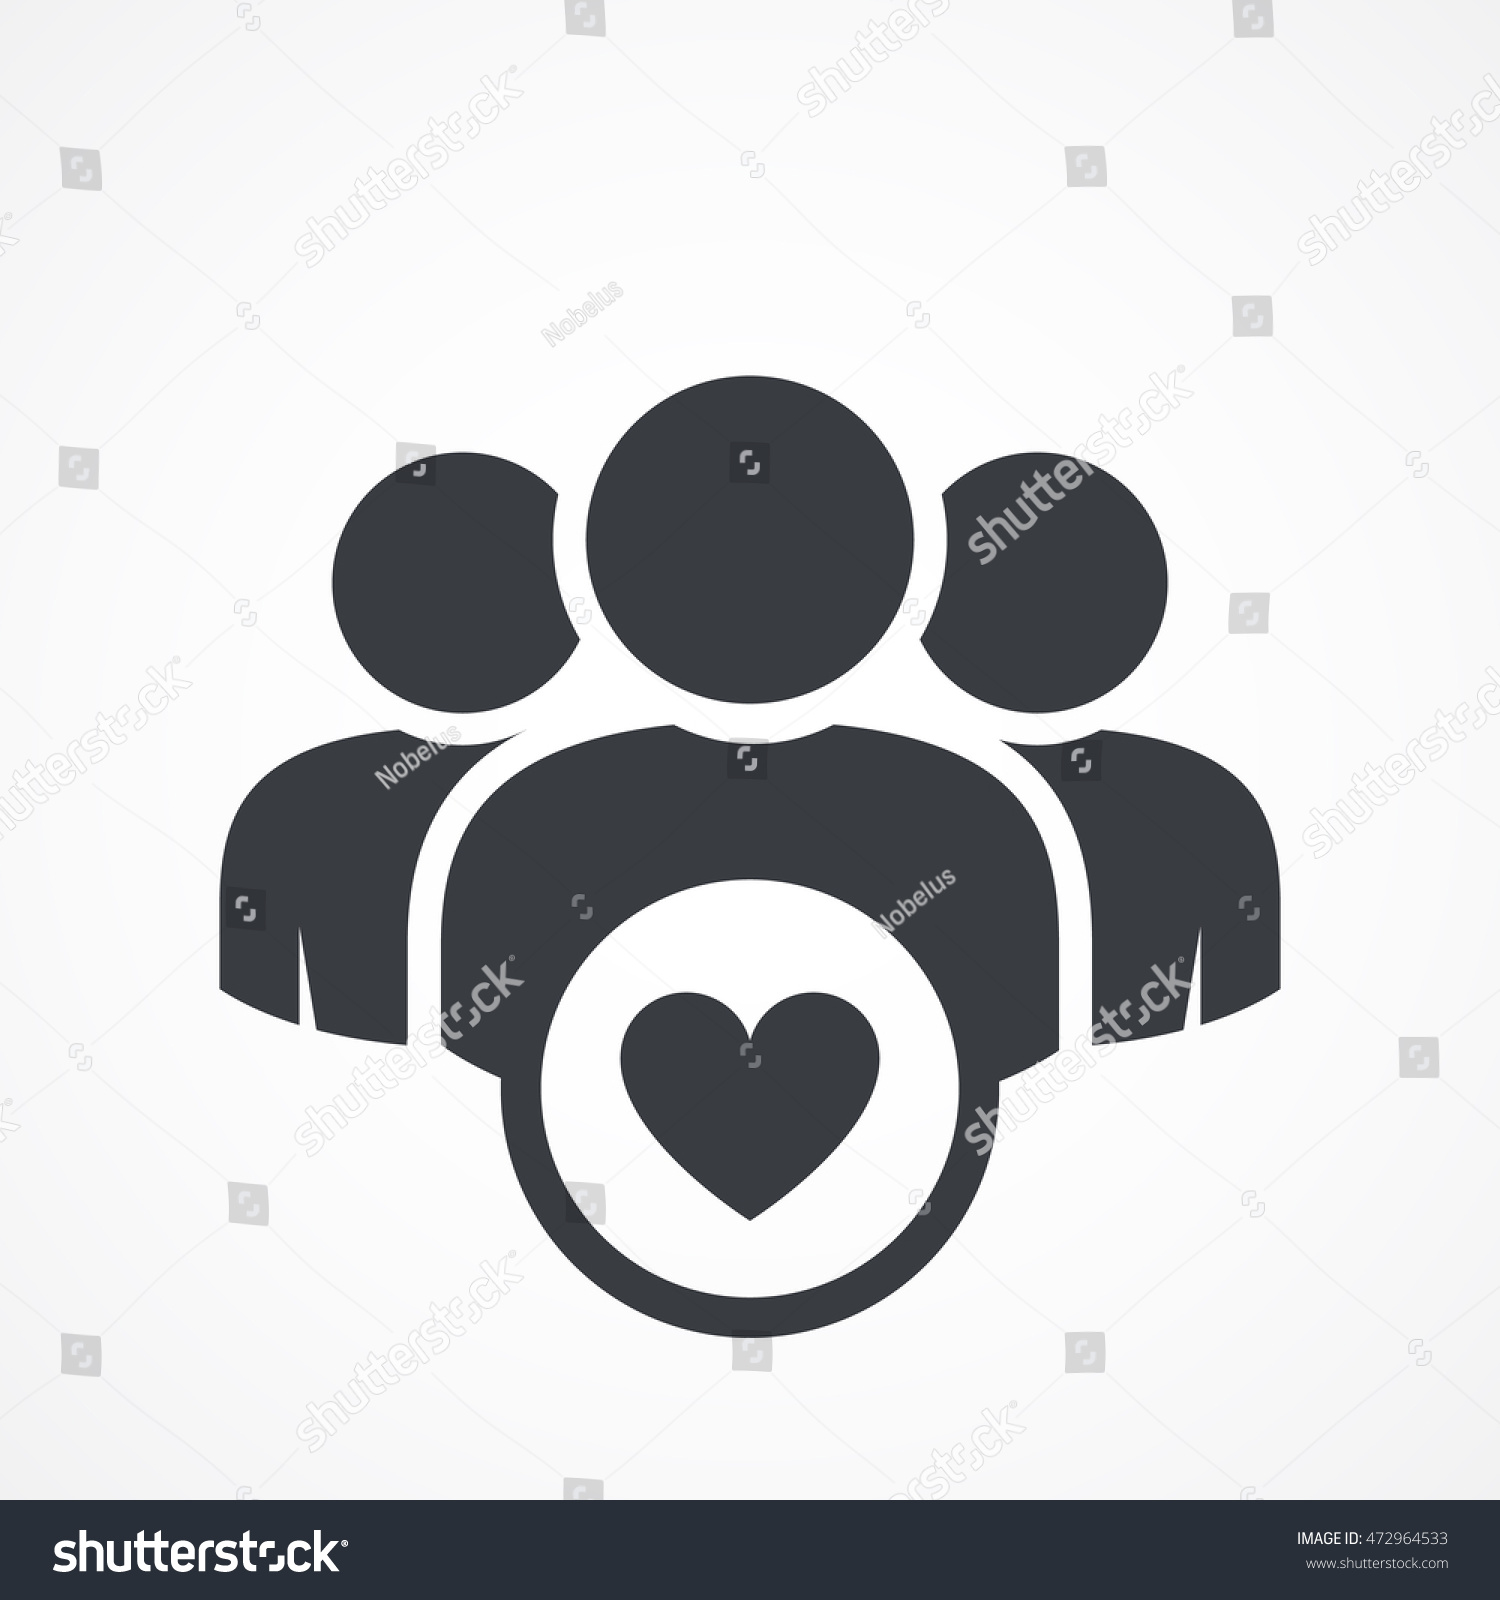 User group icon. Management Business Team Leader Sign. Social Media, Teamwork concept. Customer icon. Love symbol. Health care management. Heart group icon. Wedding group. Happy business team icon #472964533